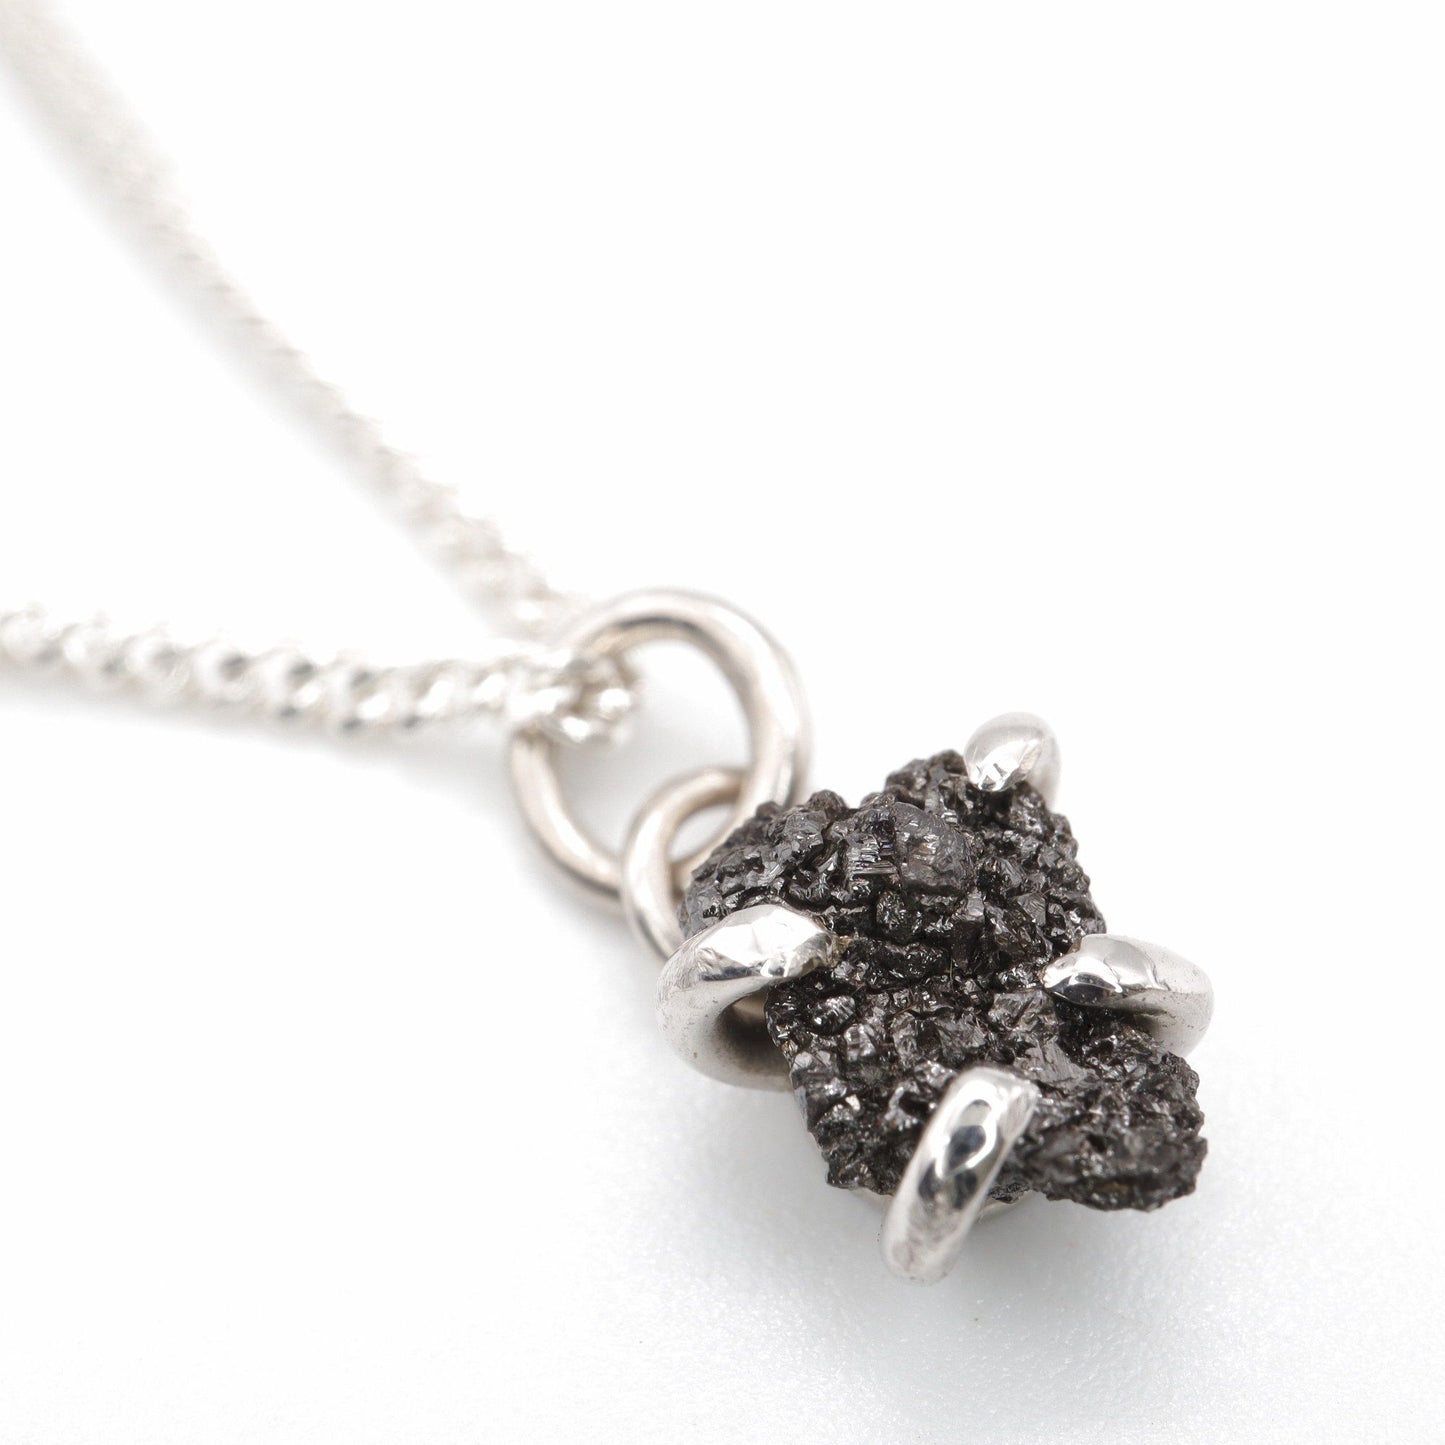 Black uncut natural raw diamond handmade pendant